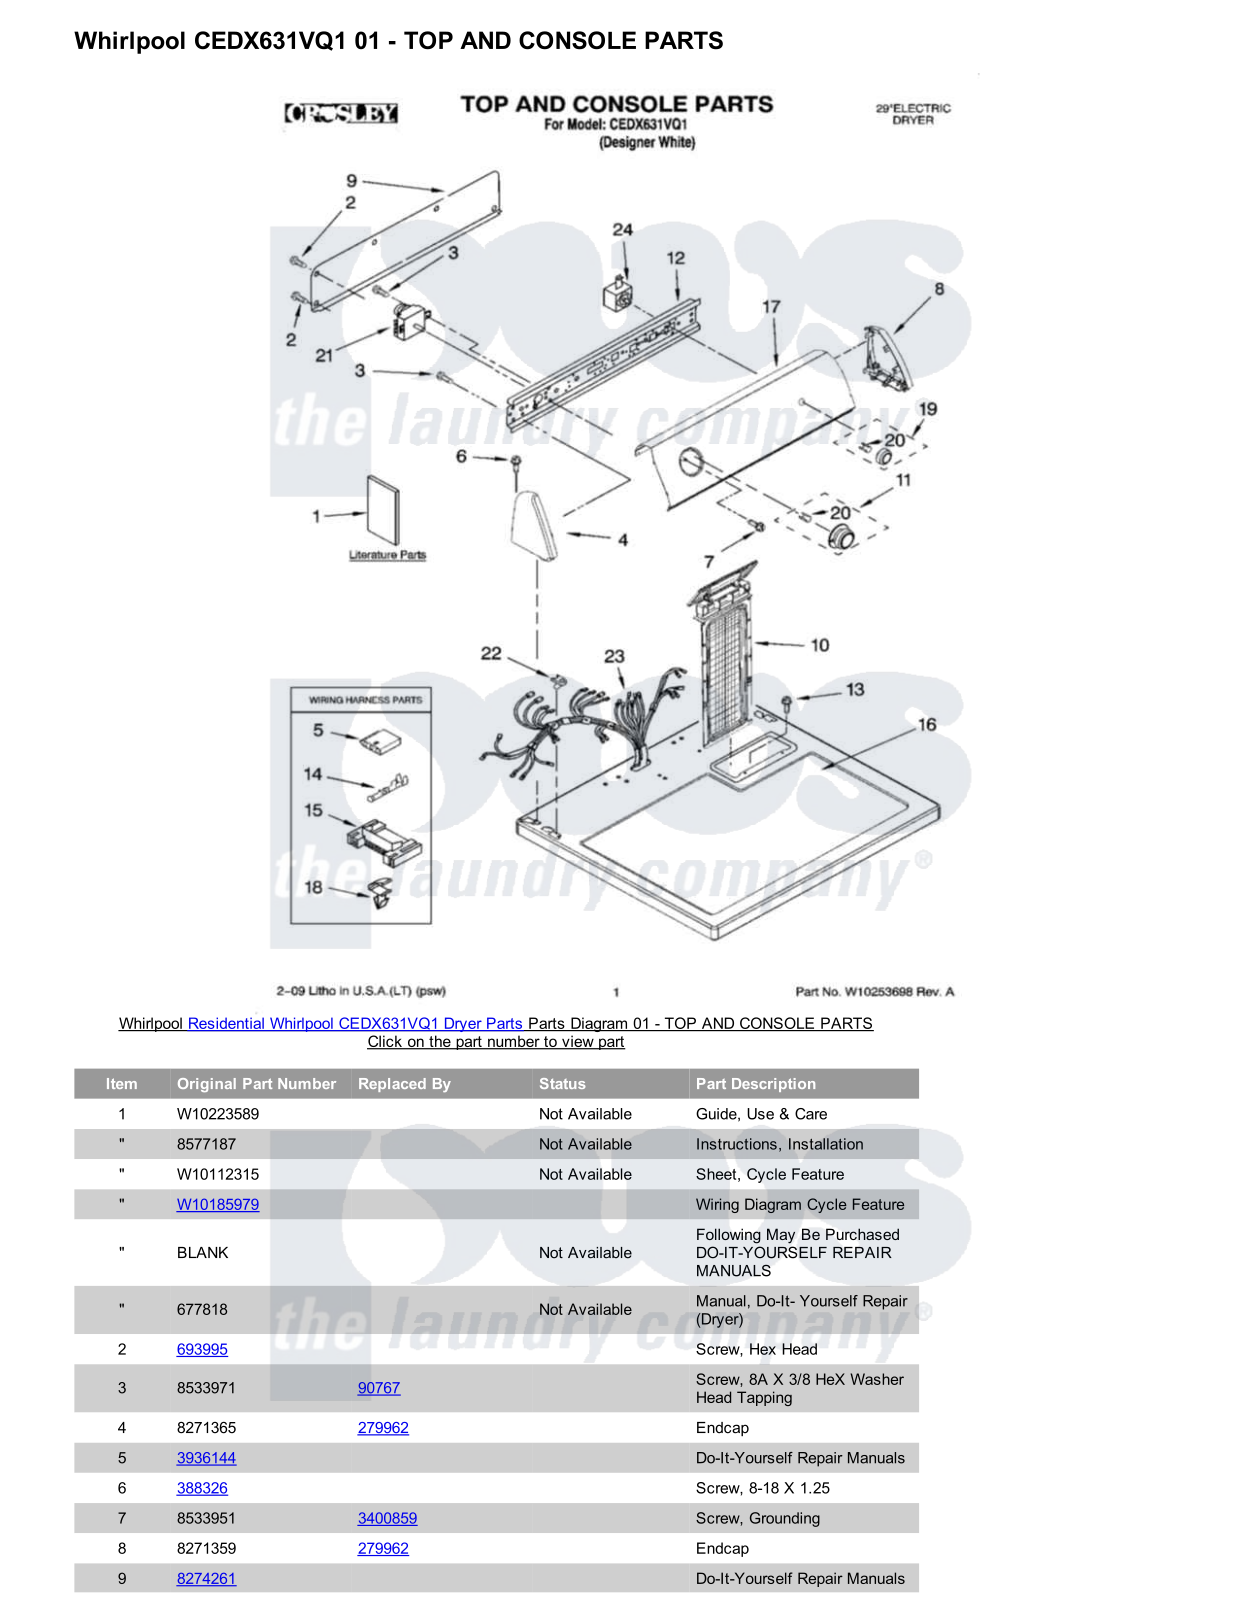 Whirlpool CEDX631VQ1 Parts Diagram